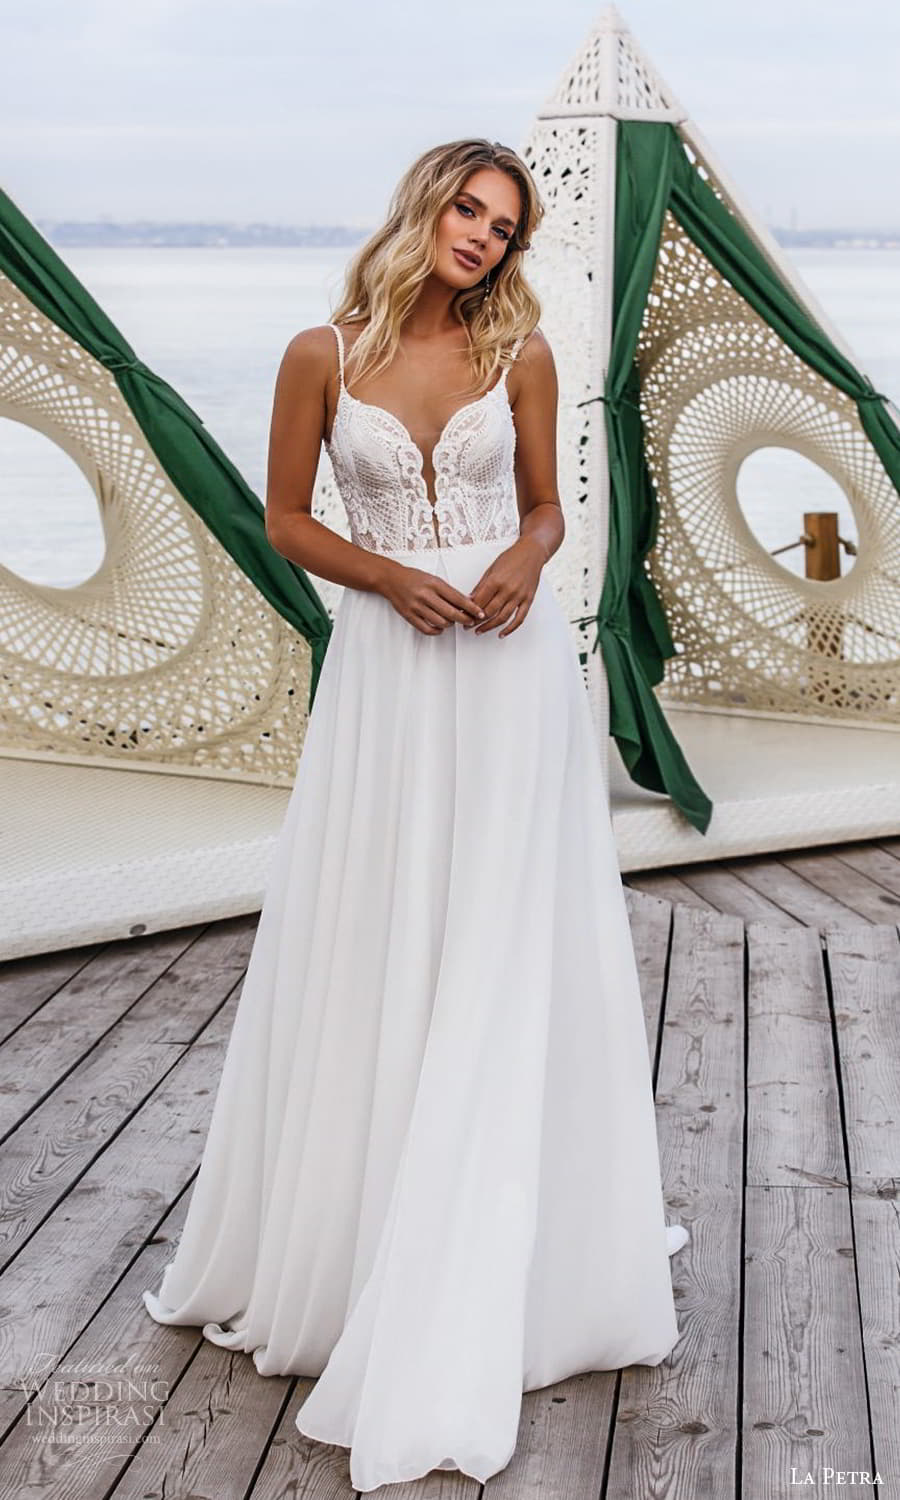 la petra 2021 bridal sleeveless straps sweetheart neckline embellished bodice clean skirt a line wedding dress chapel train (17) mv